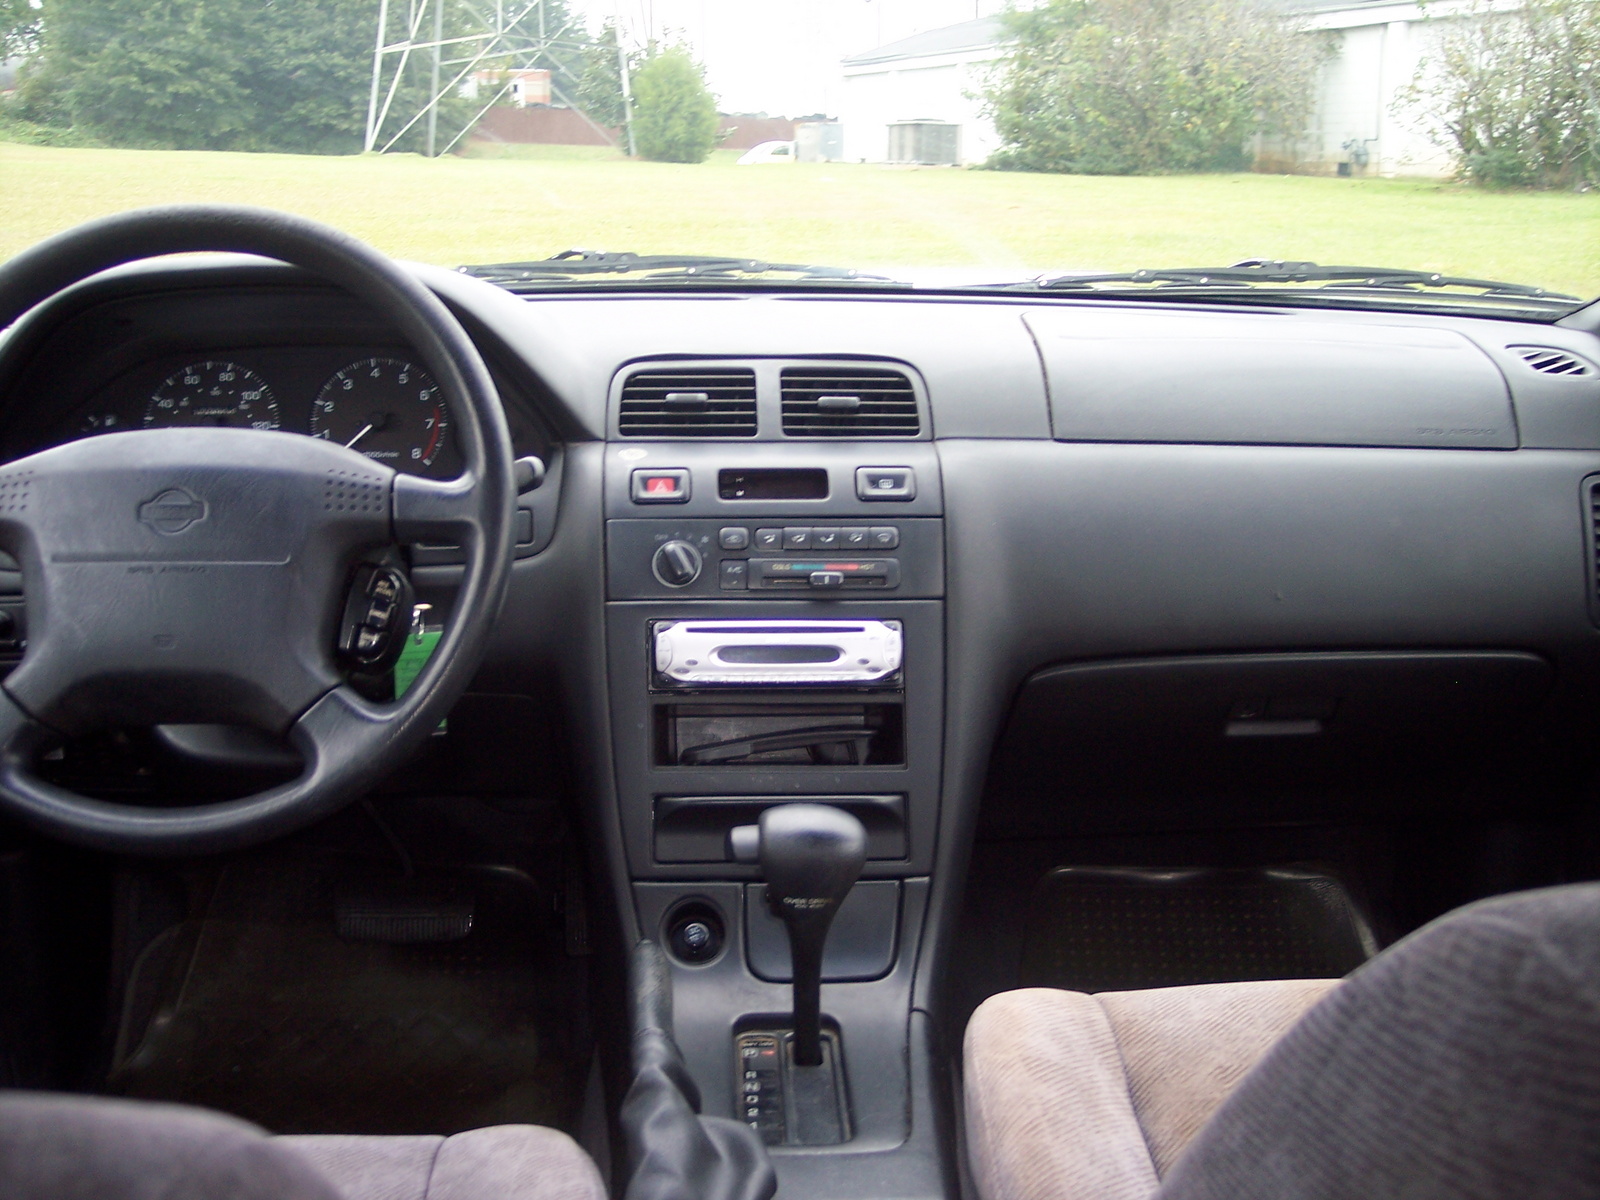 1997 Nissan maxima interior #2